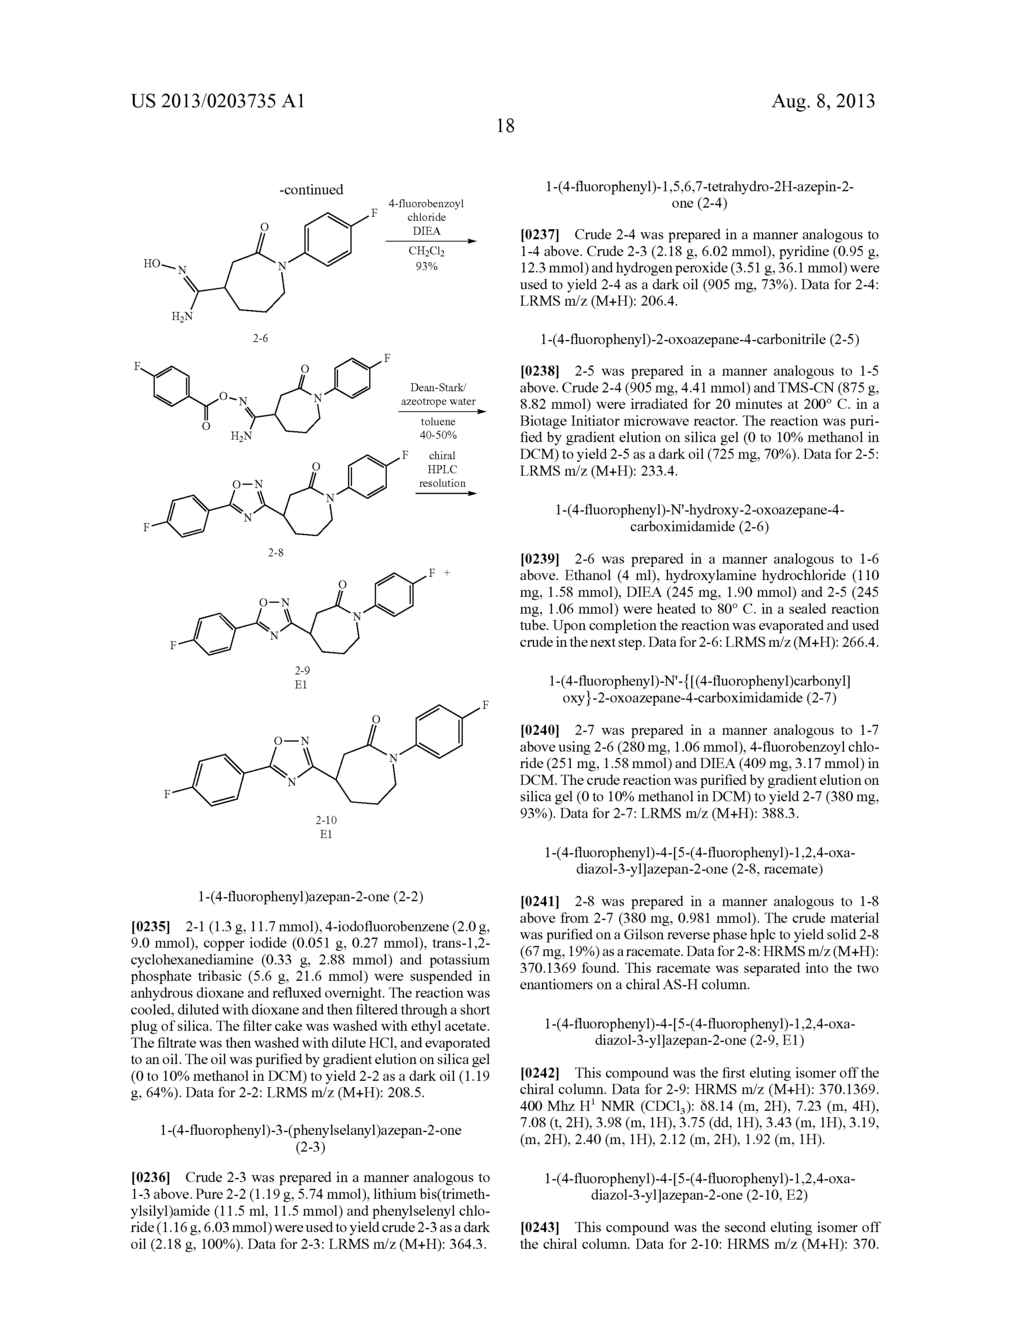 CAPROLACTAM MGLUR5 RECEPTOR MODULATORS - diagram, schematic, and image 19